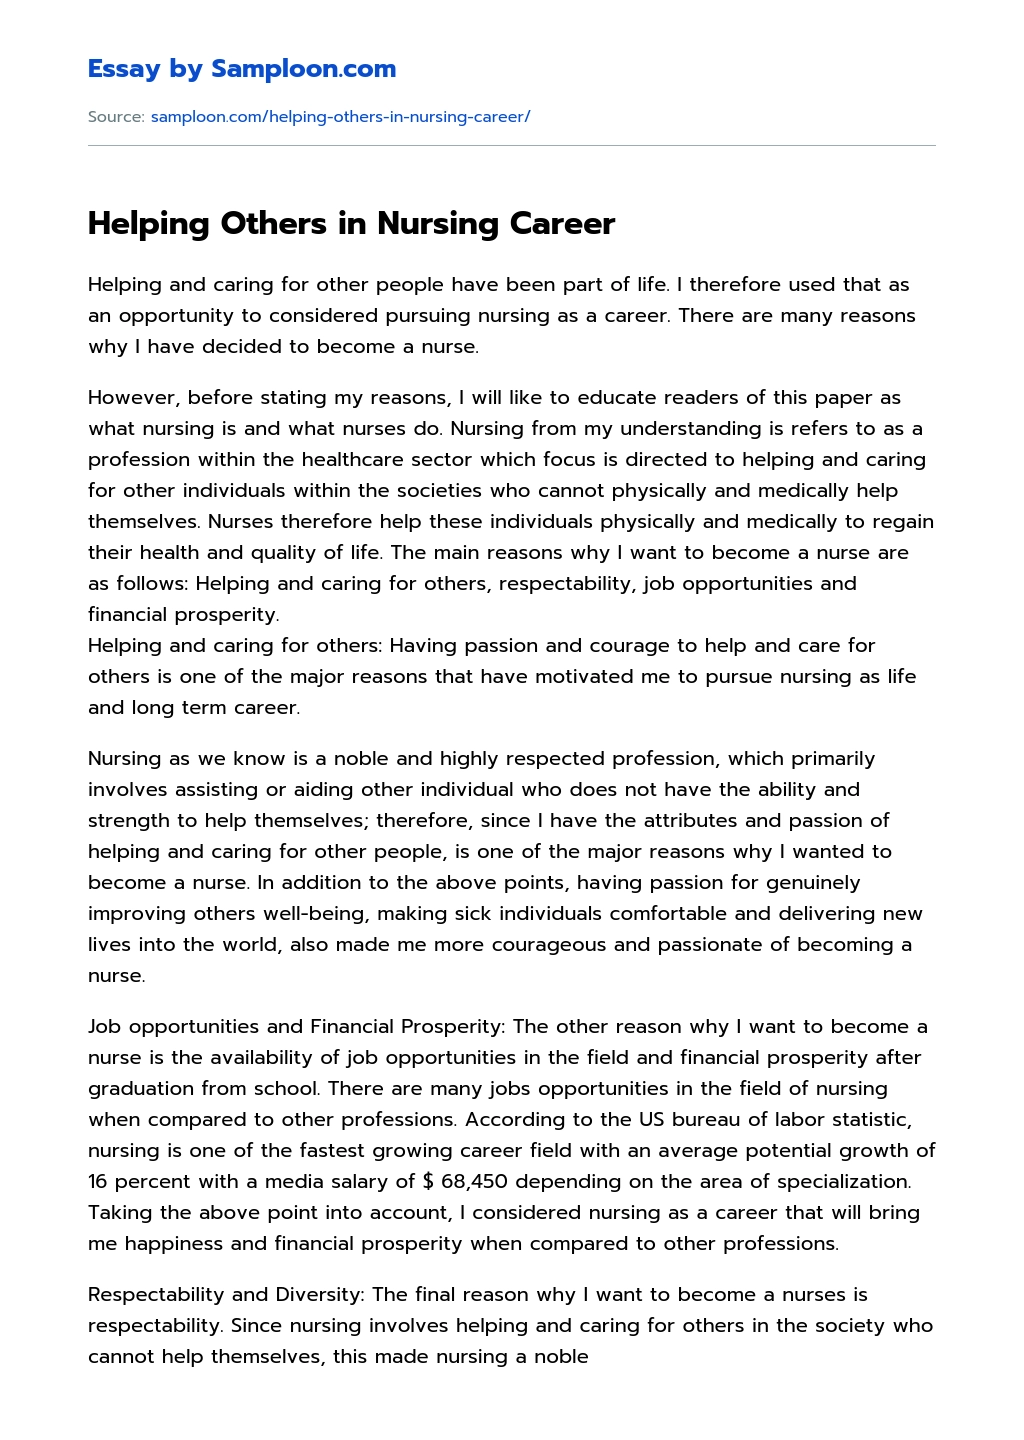 Helping Others in Nursing Career essay